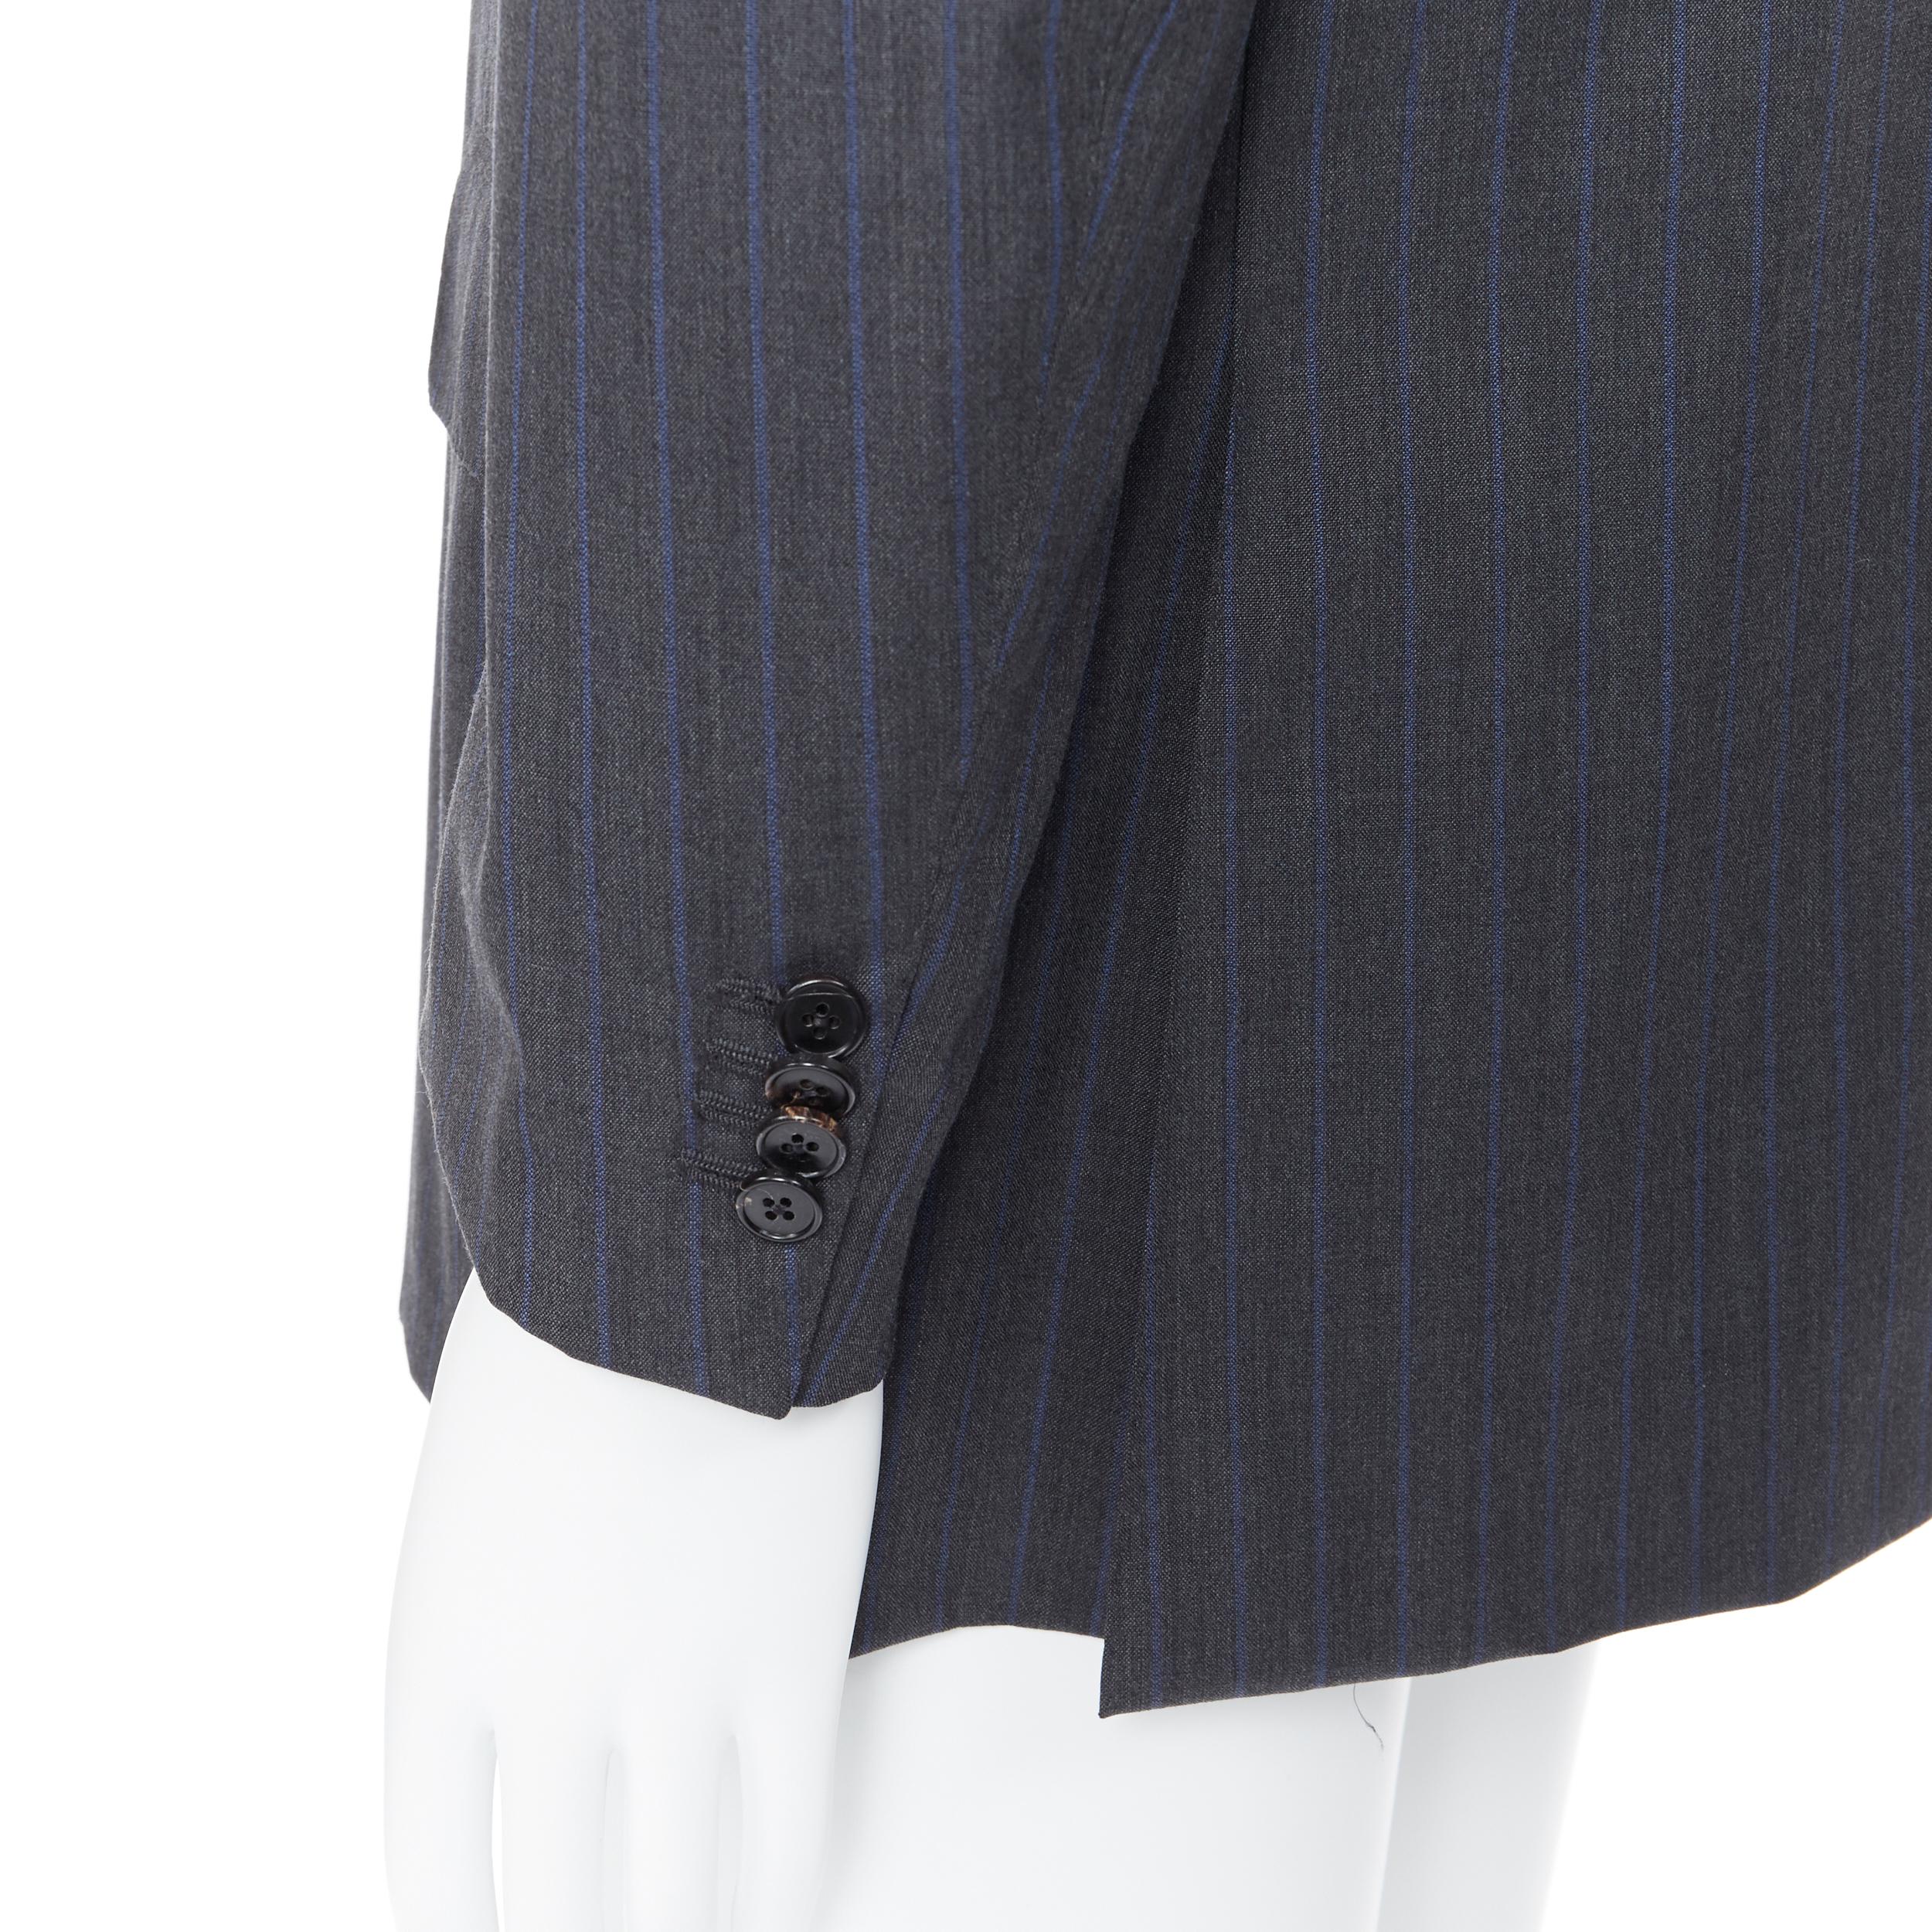 ERMENEGILDO ZEGNA Cool Effect grey blue pinstripe wool classic blazer jacket 50R 4